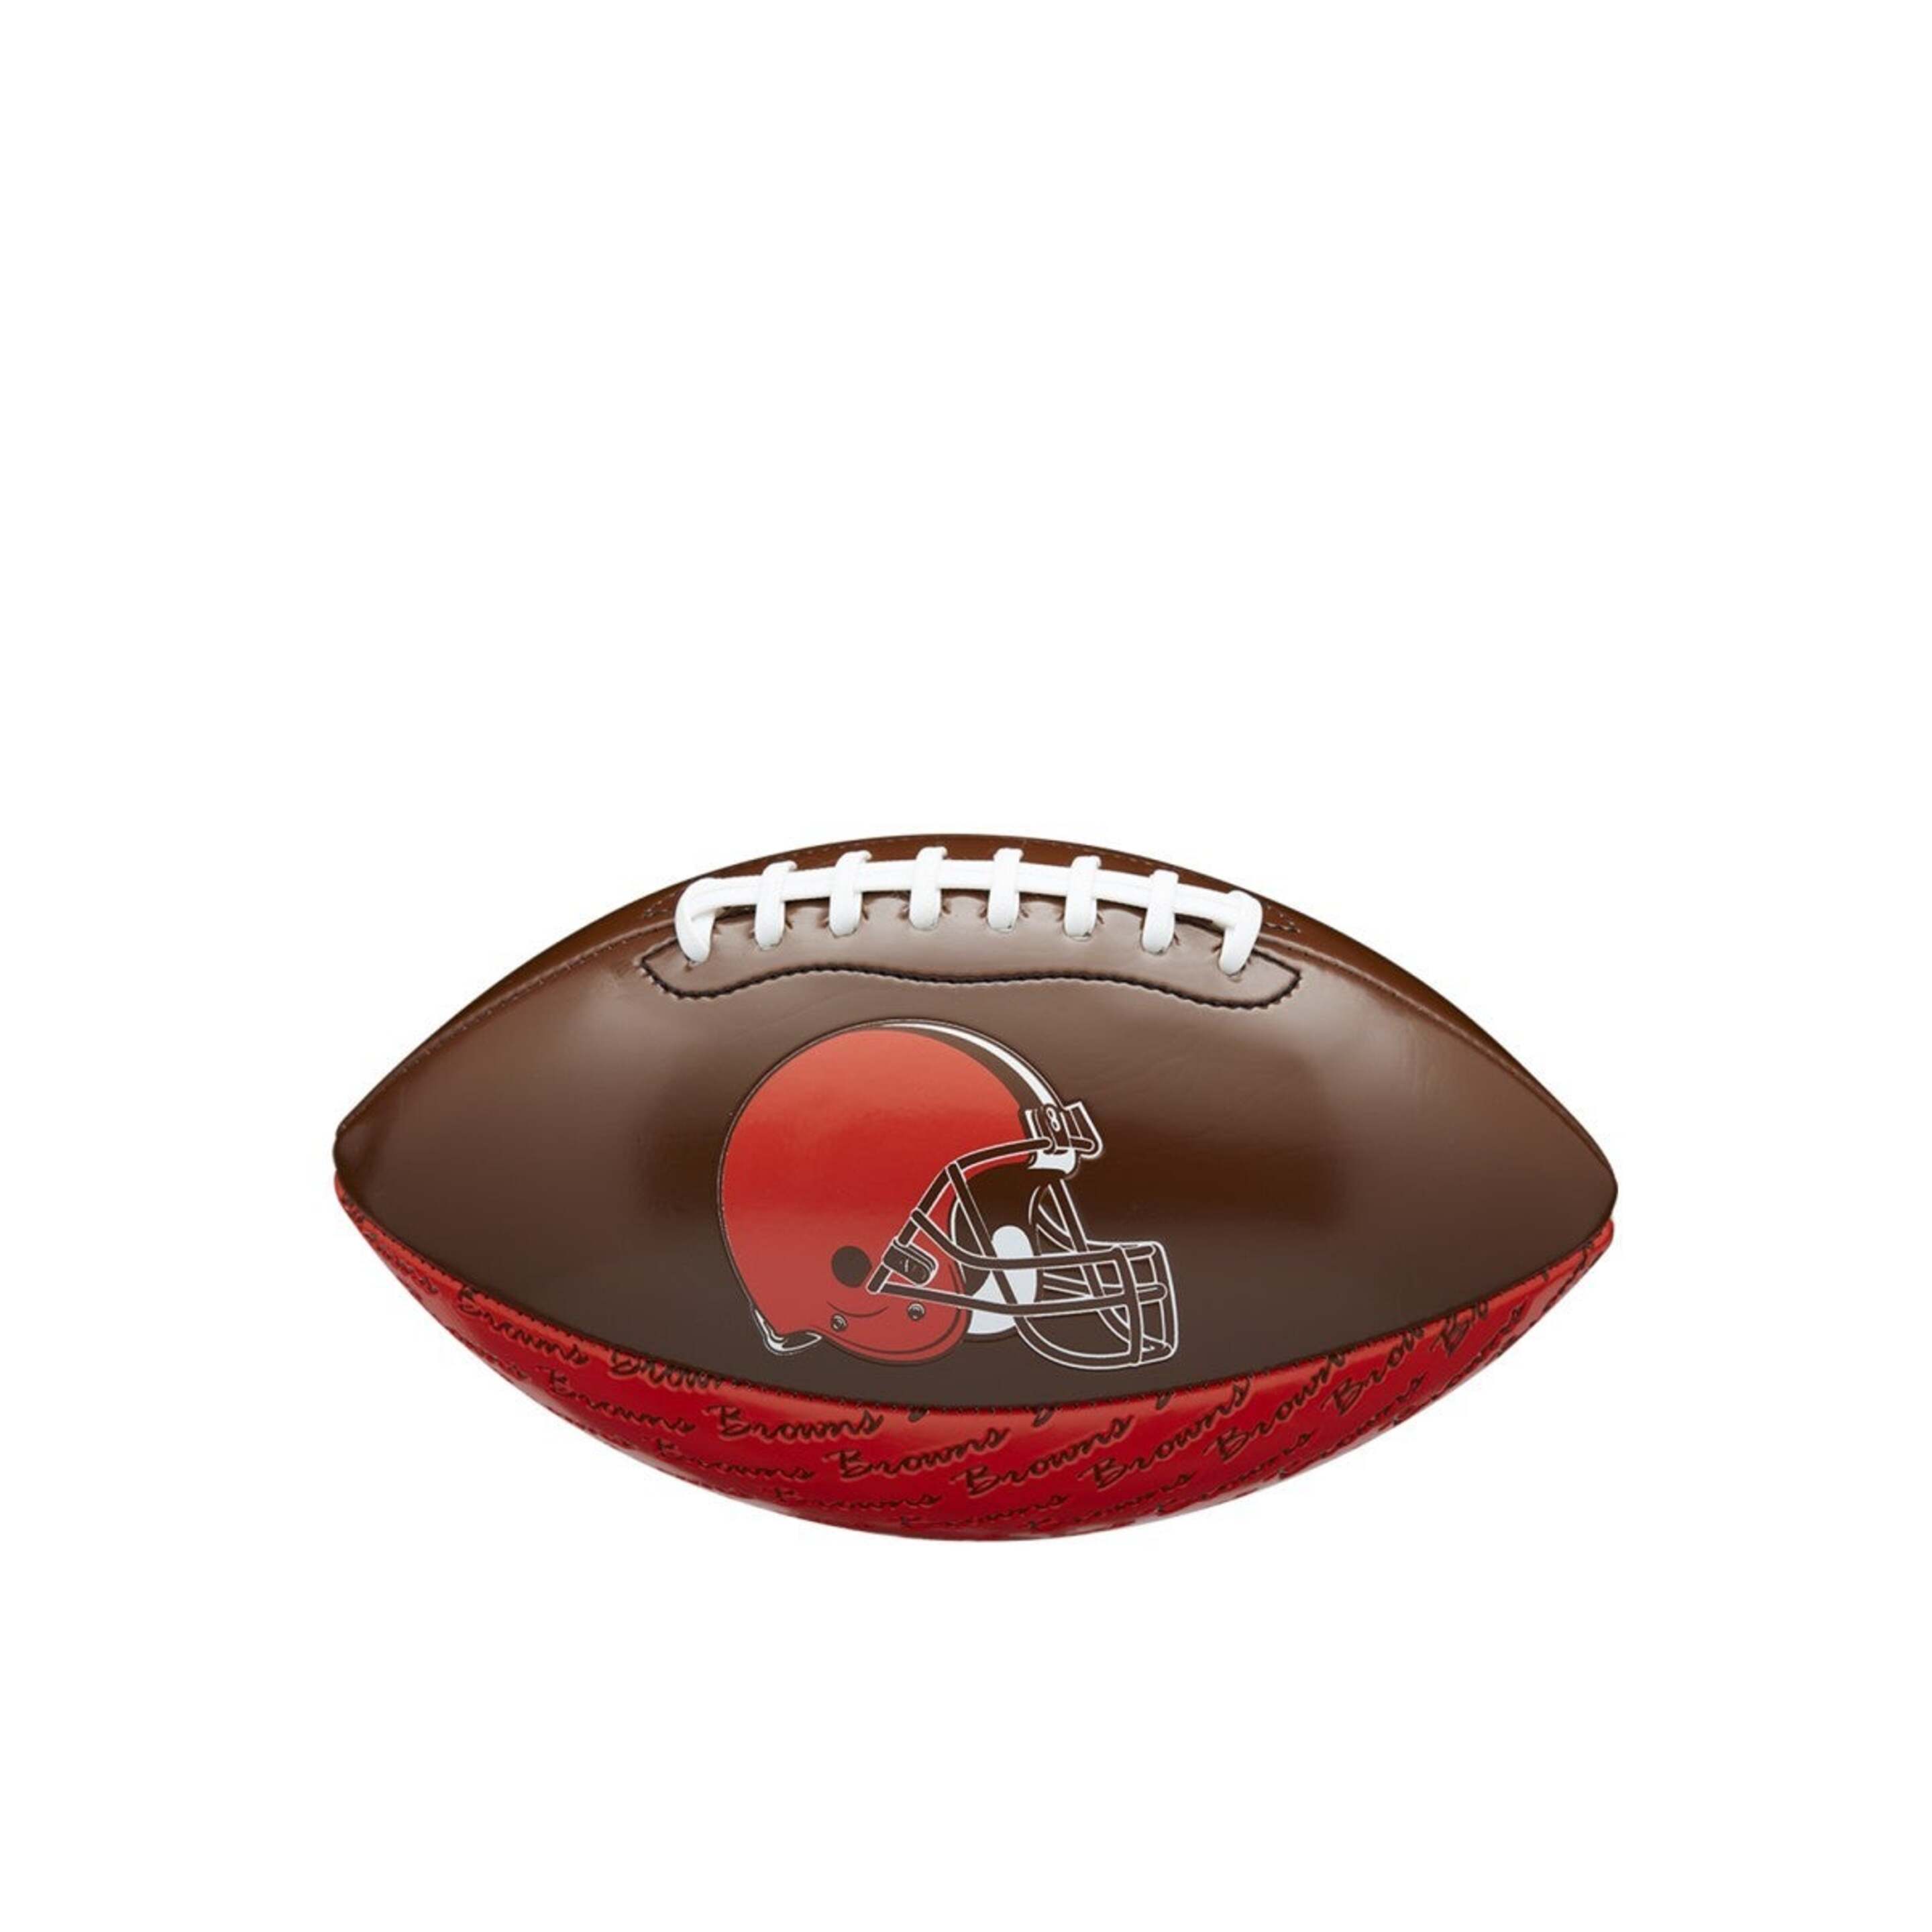 Mini Balón Infantil Nfl Cleveland Browns - marron - 